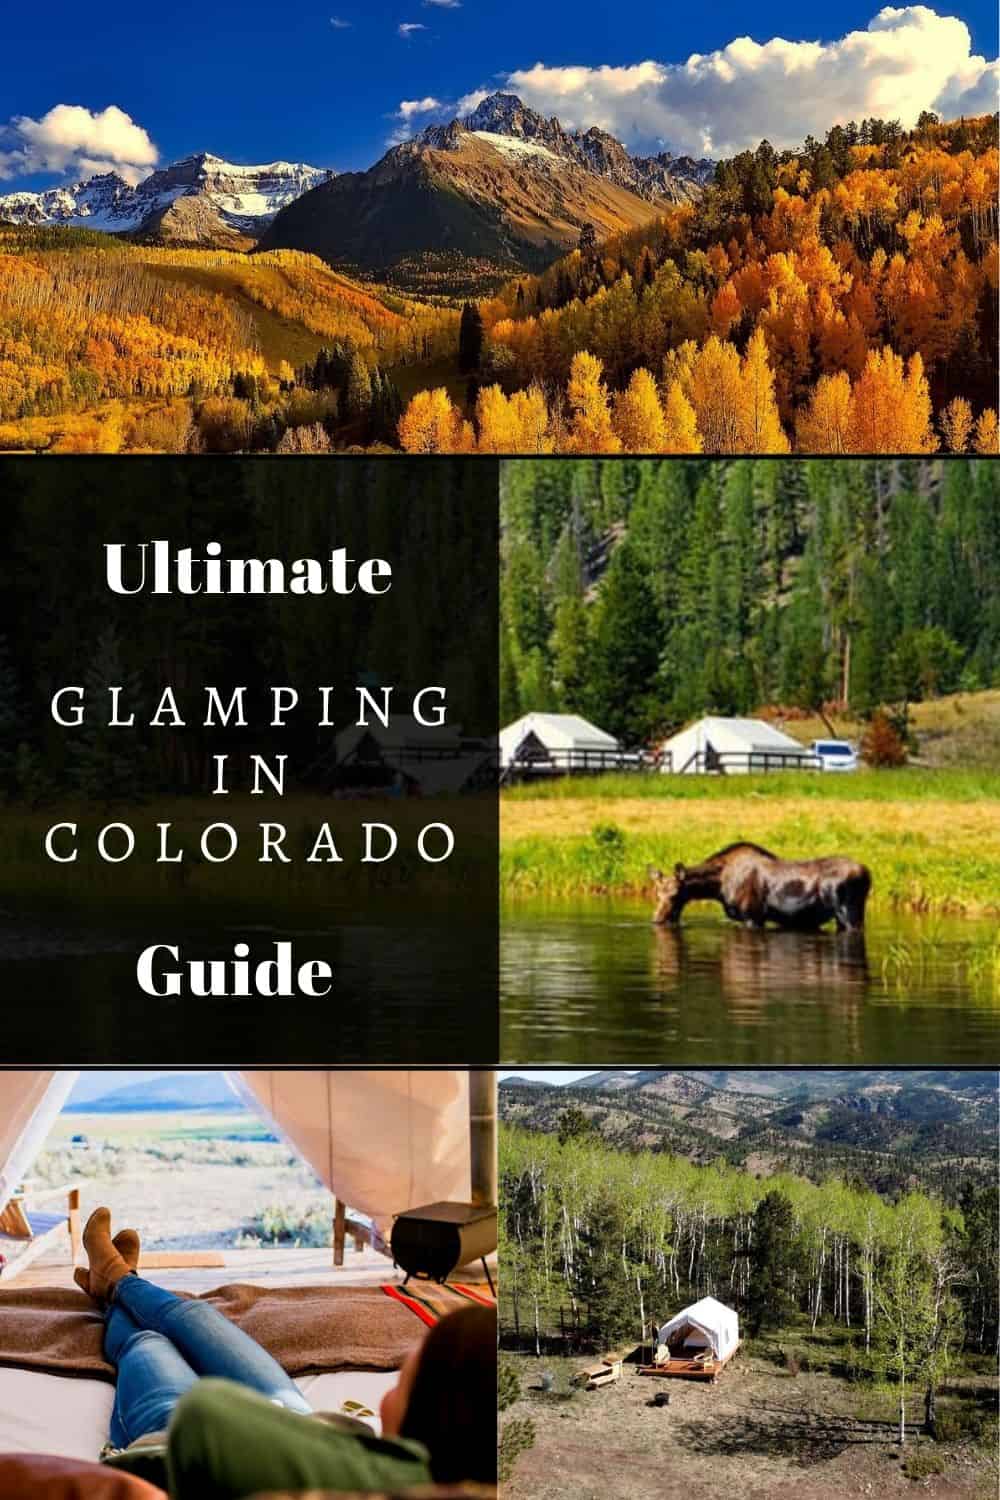 Glamping in Colorado